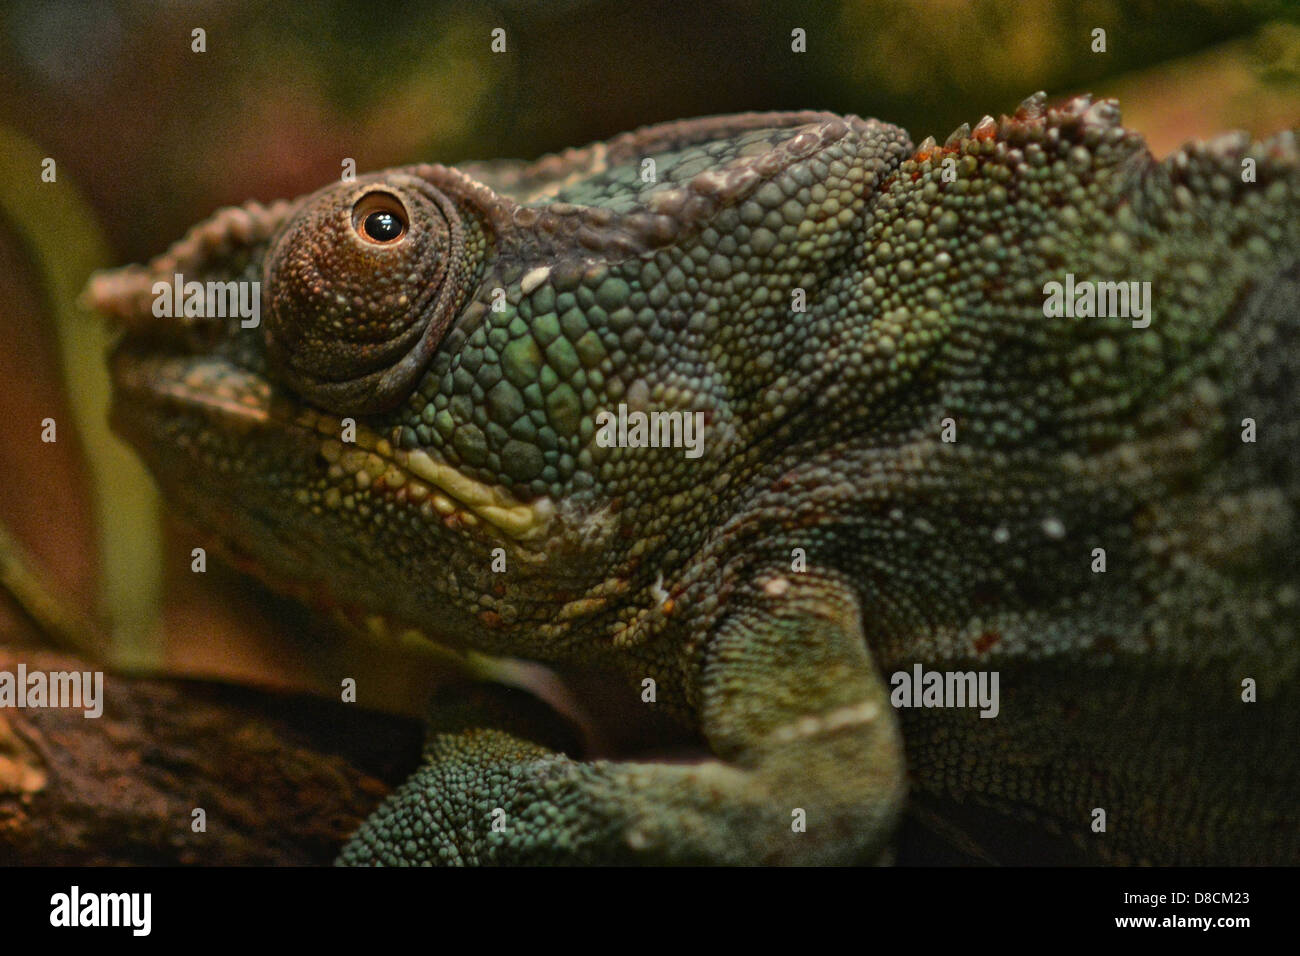 Pantherchamäleon (Furcifer Pardalis), Mimetismus, Auge, Reptil, Tier, Stockfoto